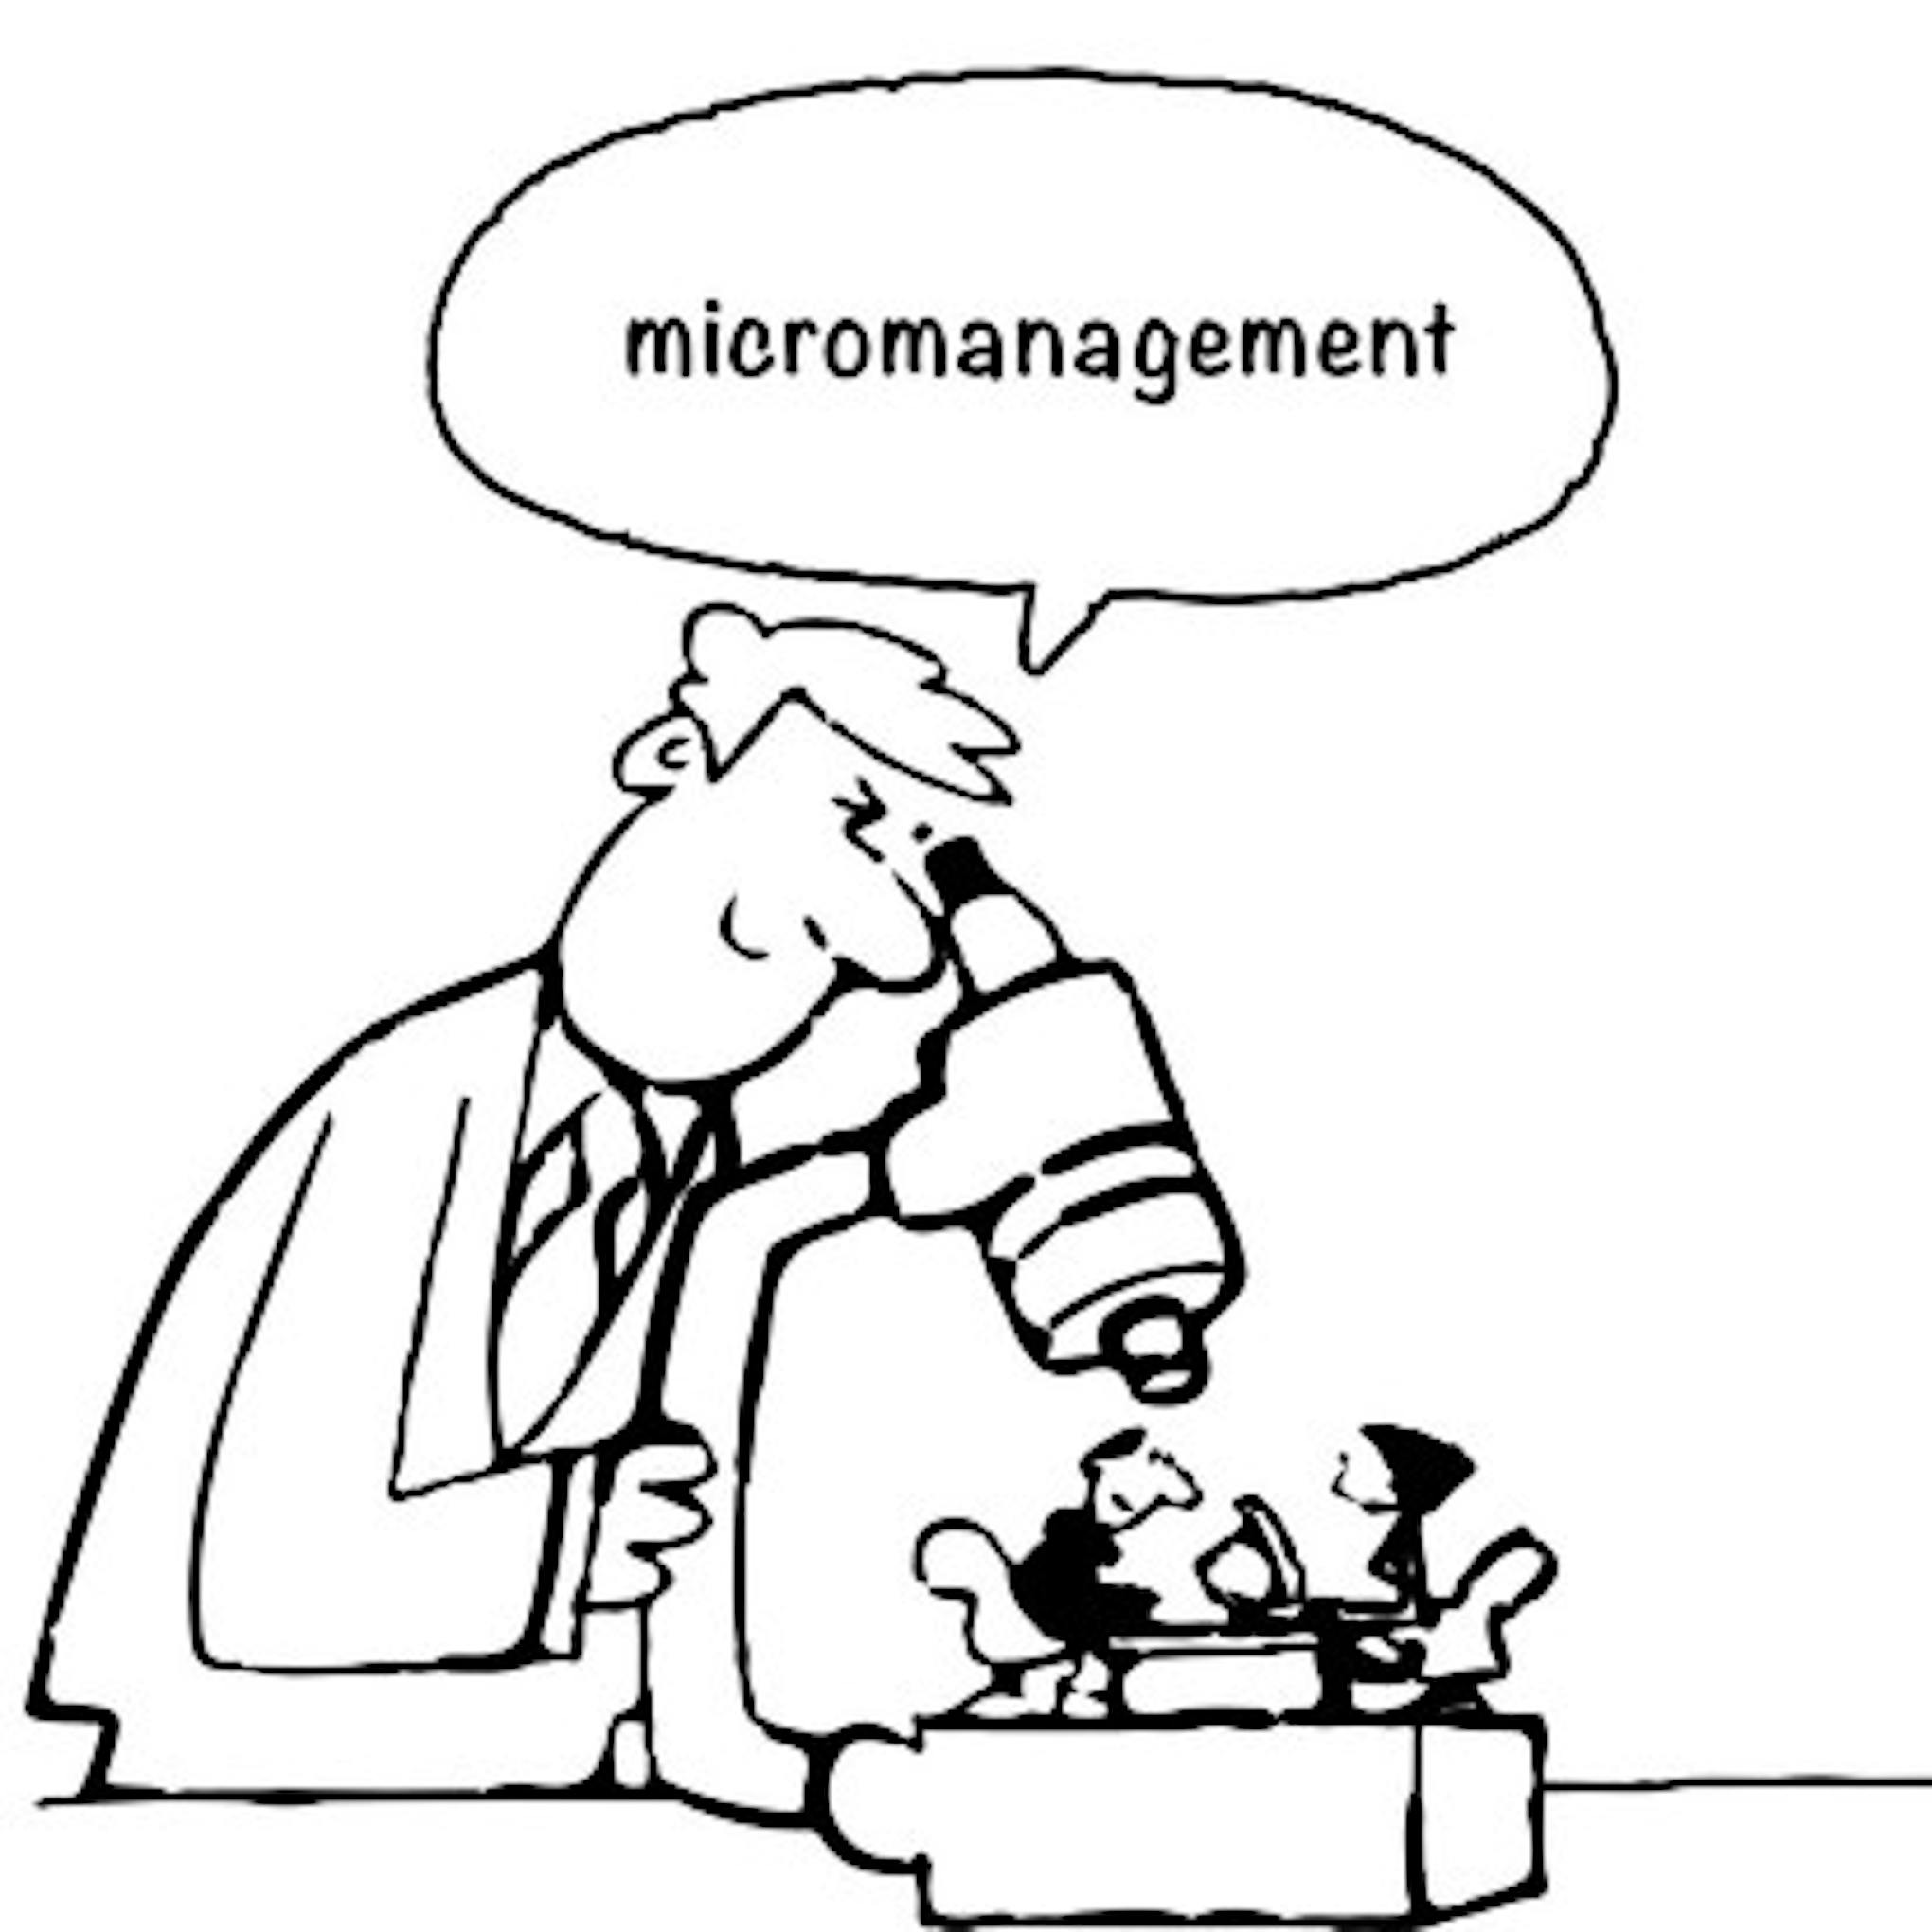 Micromanagement.